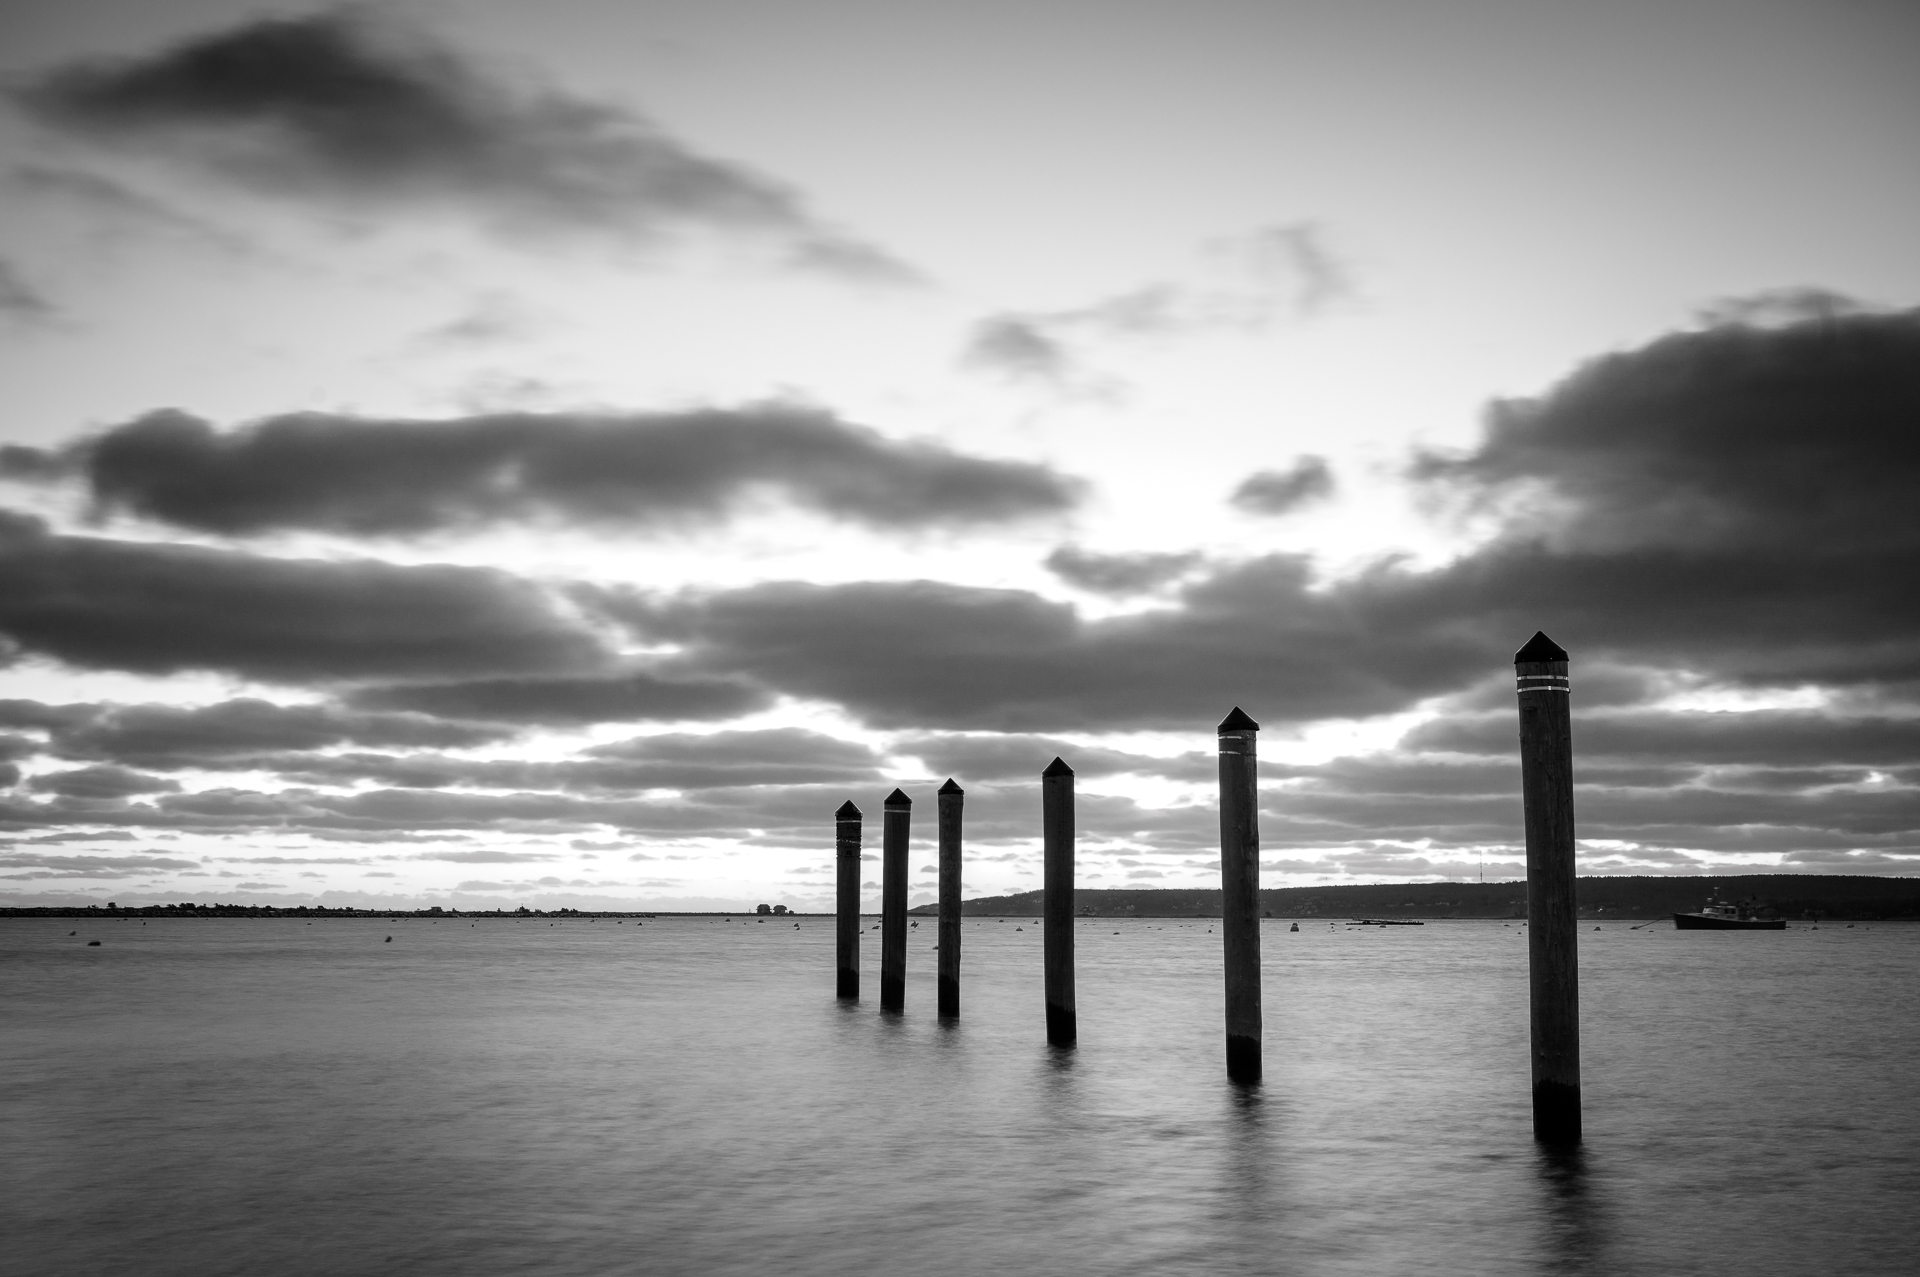 A Long exposure photo of dock pilings.